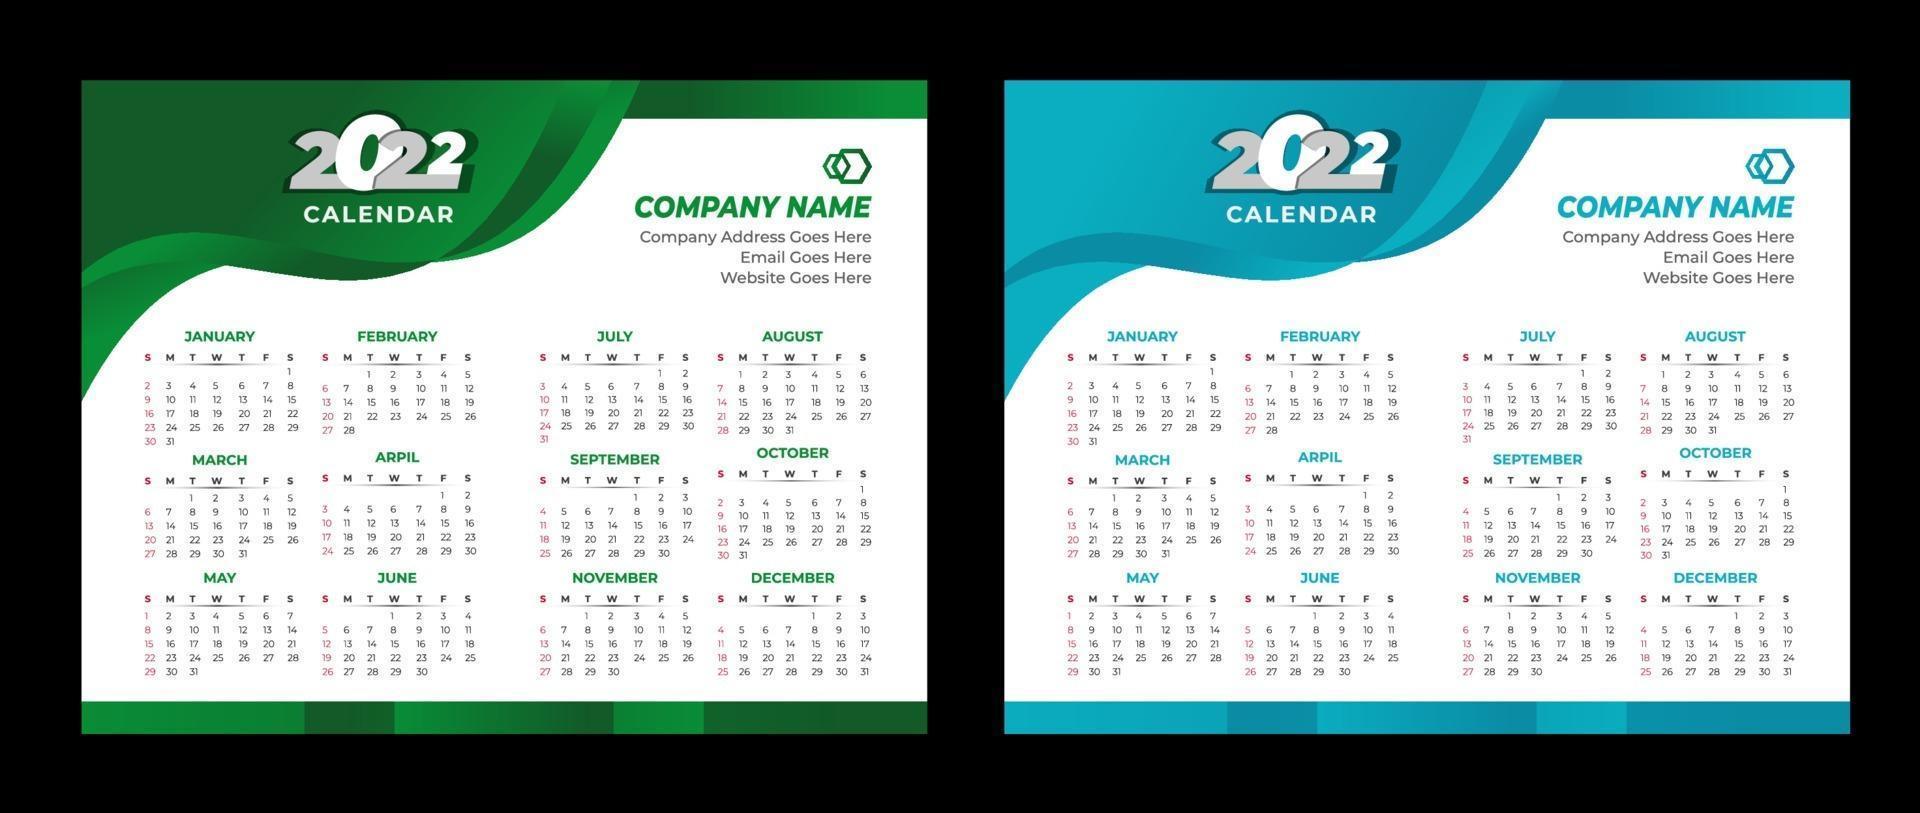 modello di calendario 2022 calendario da parete 2022 calendario da tavolo vettoriale design